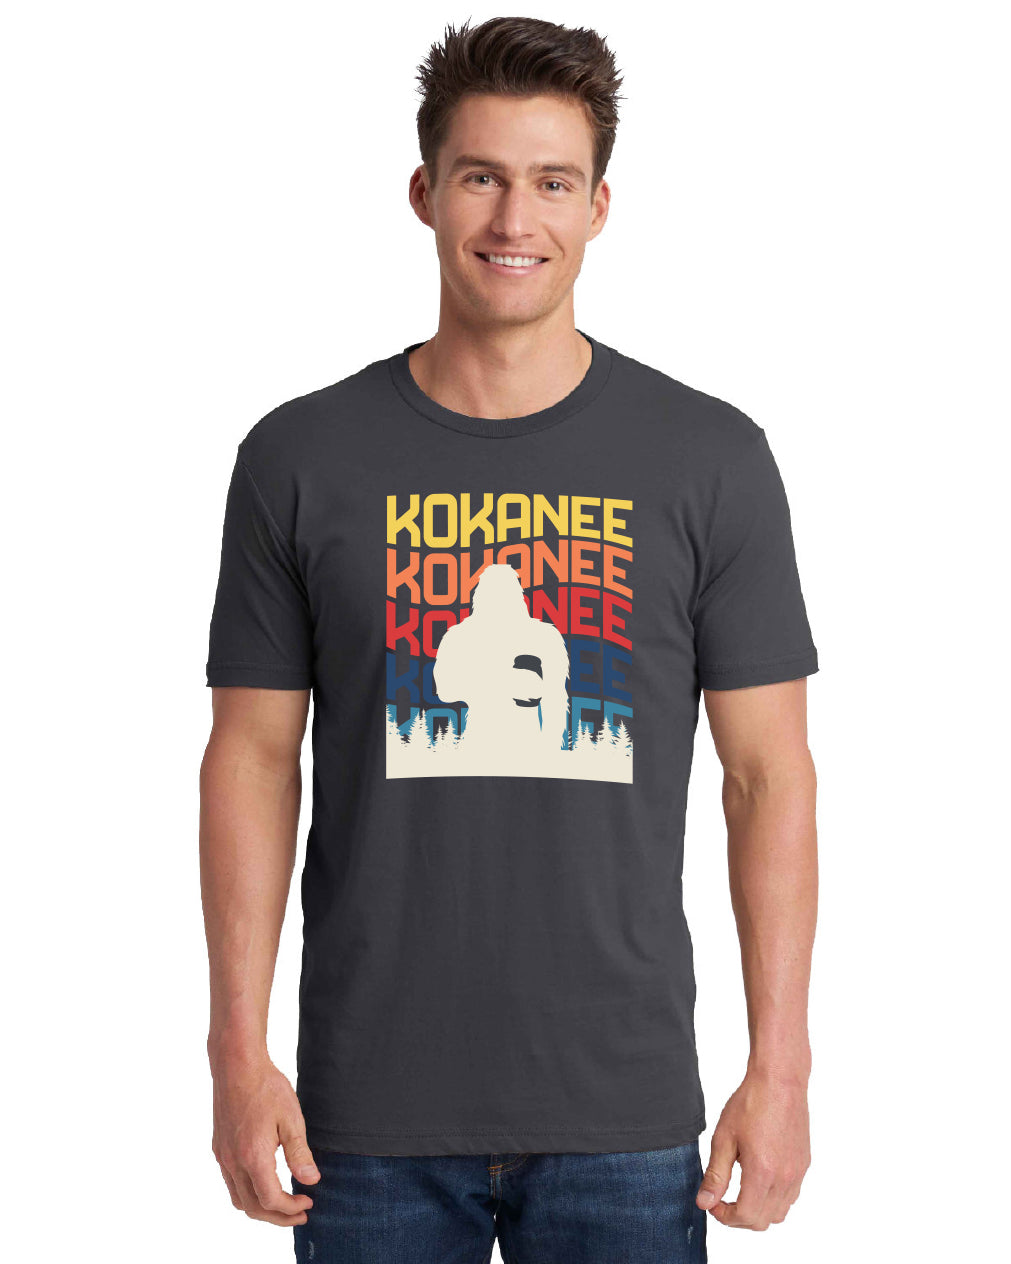 Kokanee T-shirt | Kokanee Beer Gear Store | Columbia Brewery | Creston BC